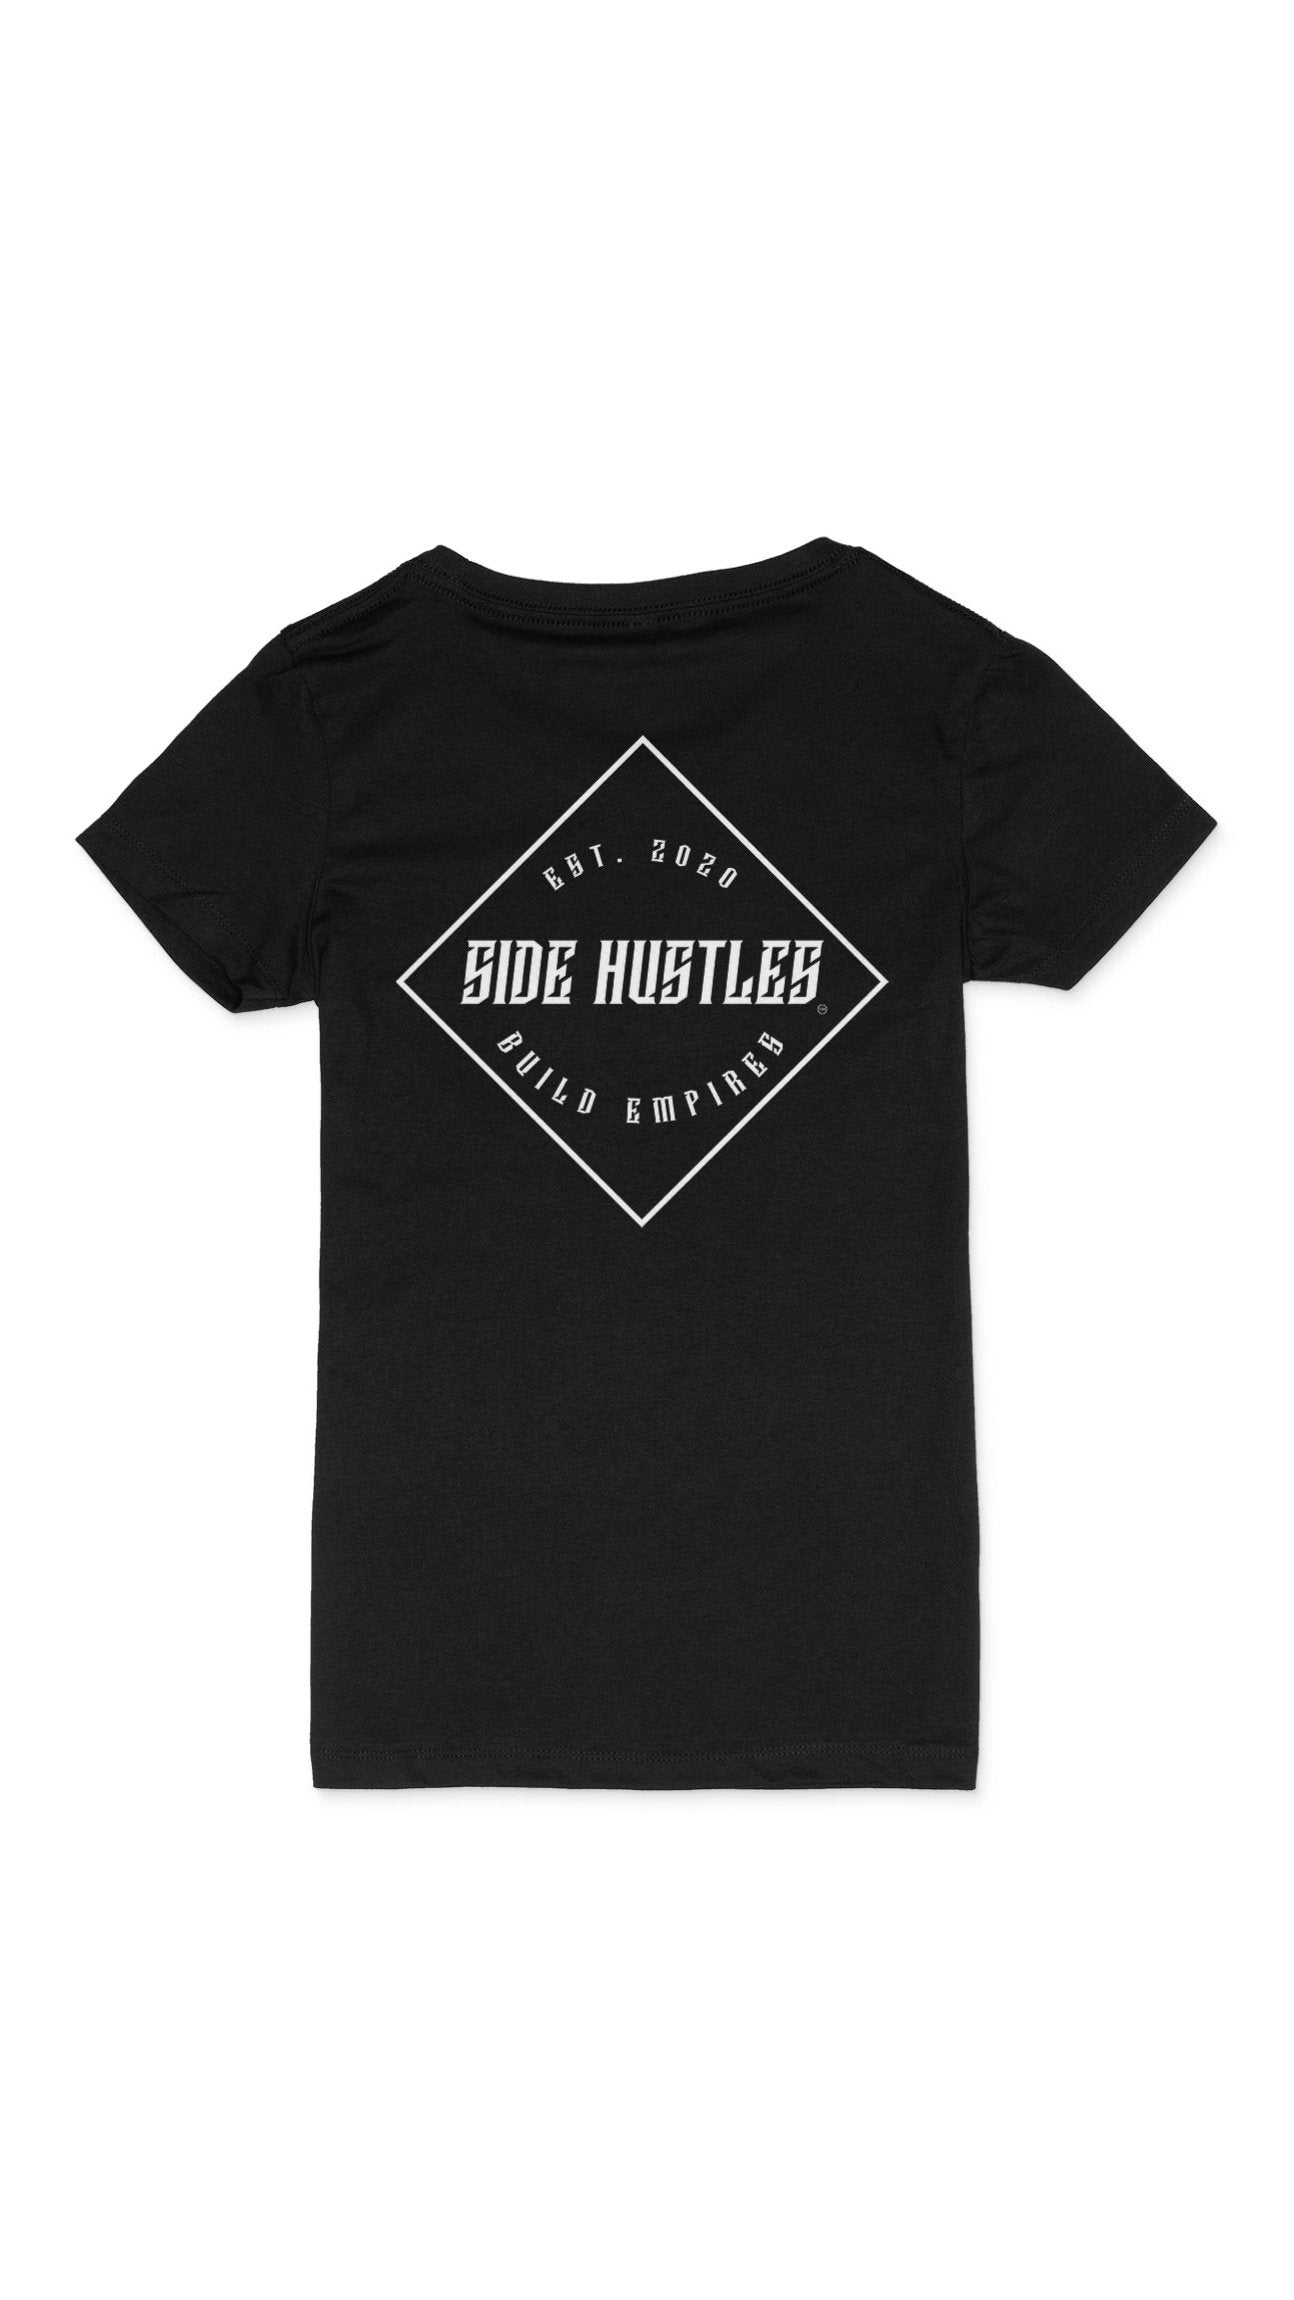 Soft black new t shirt for women side hustle idea